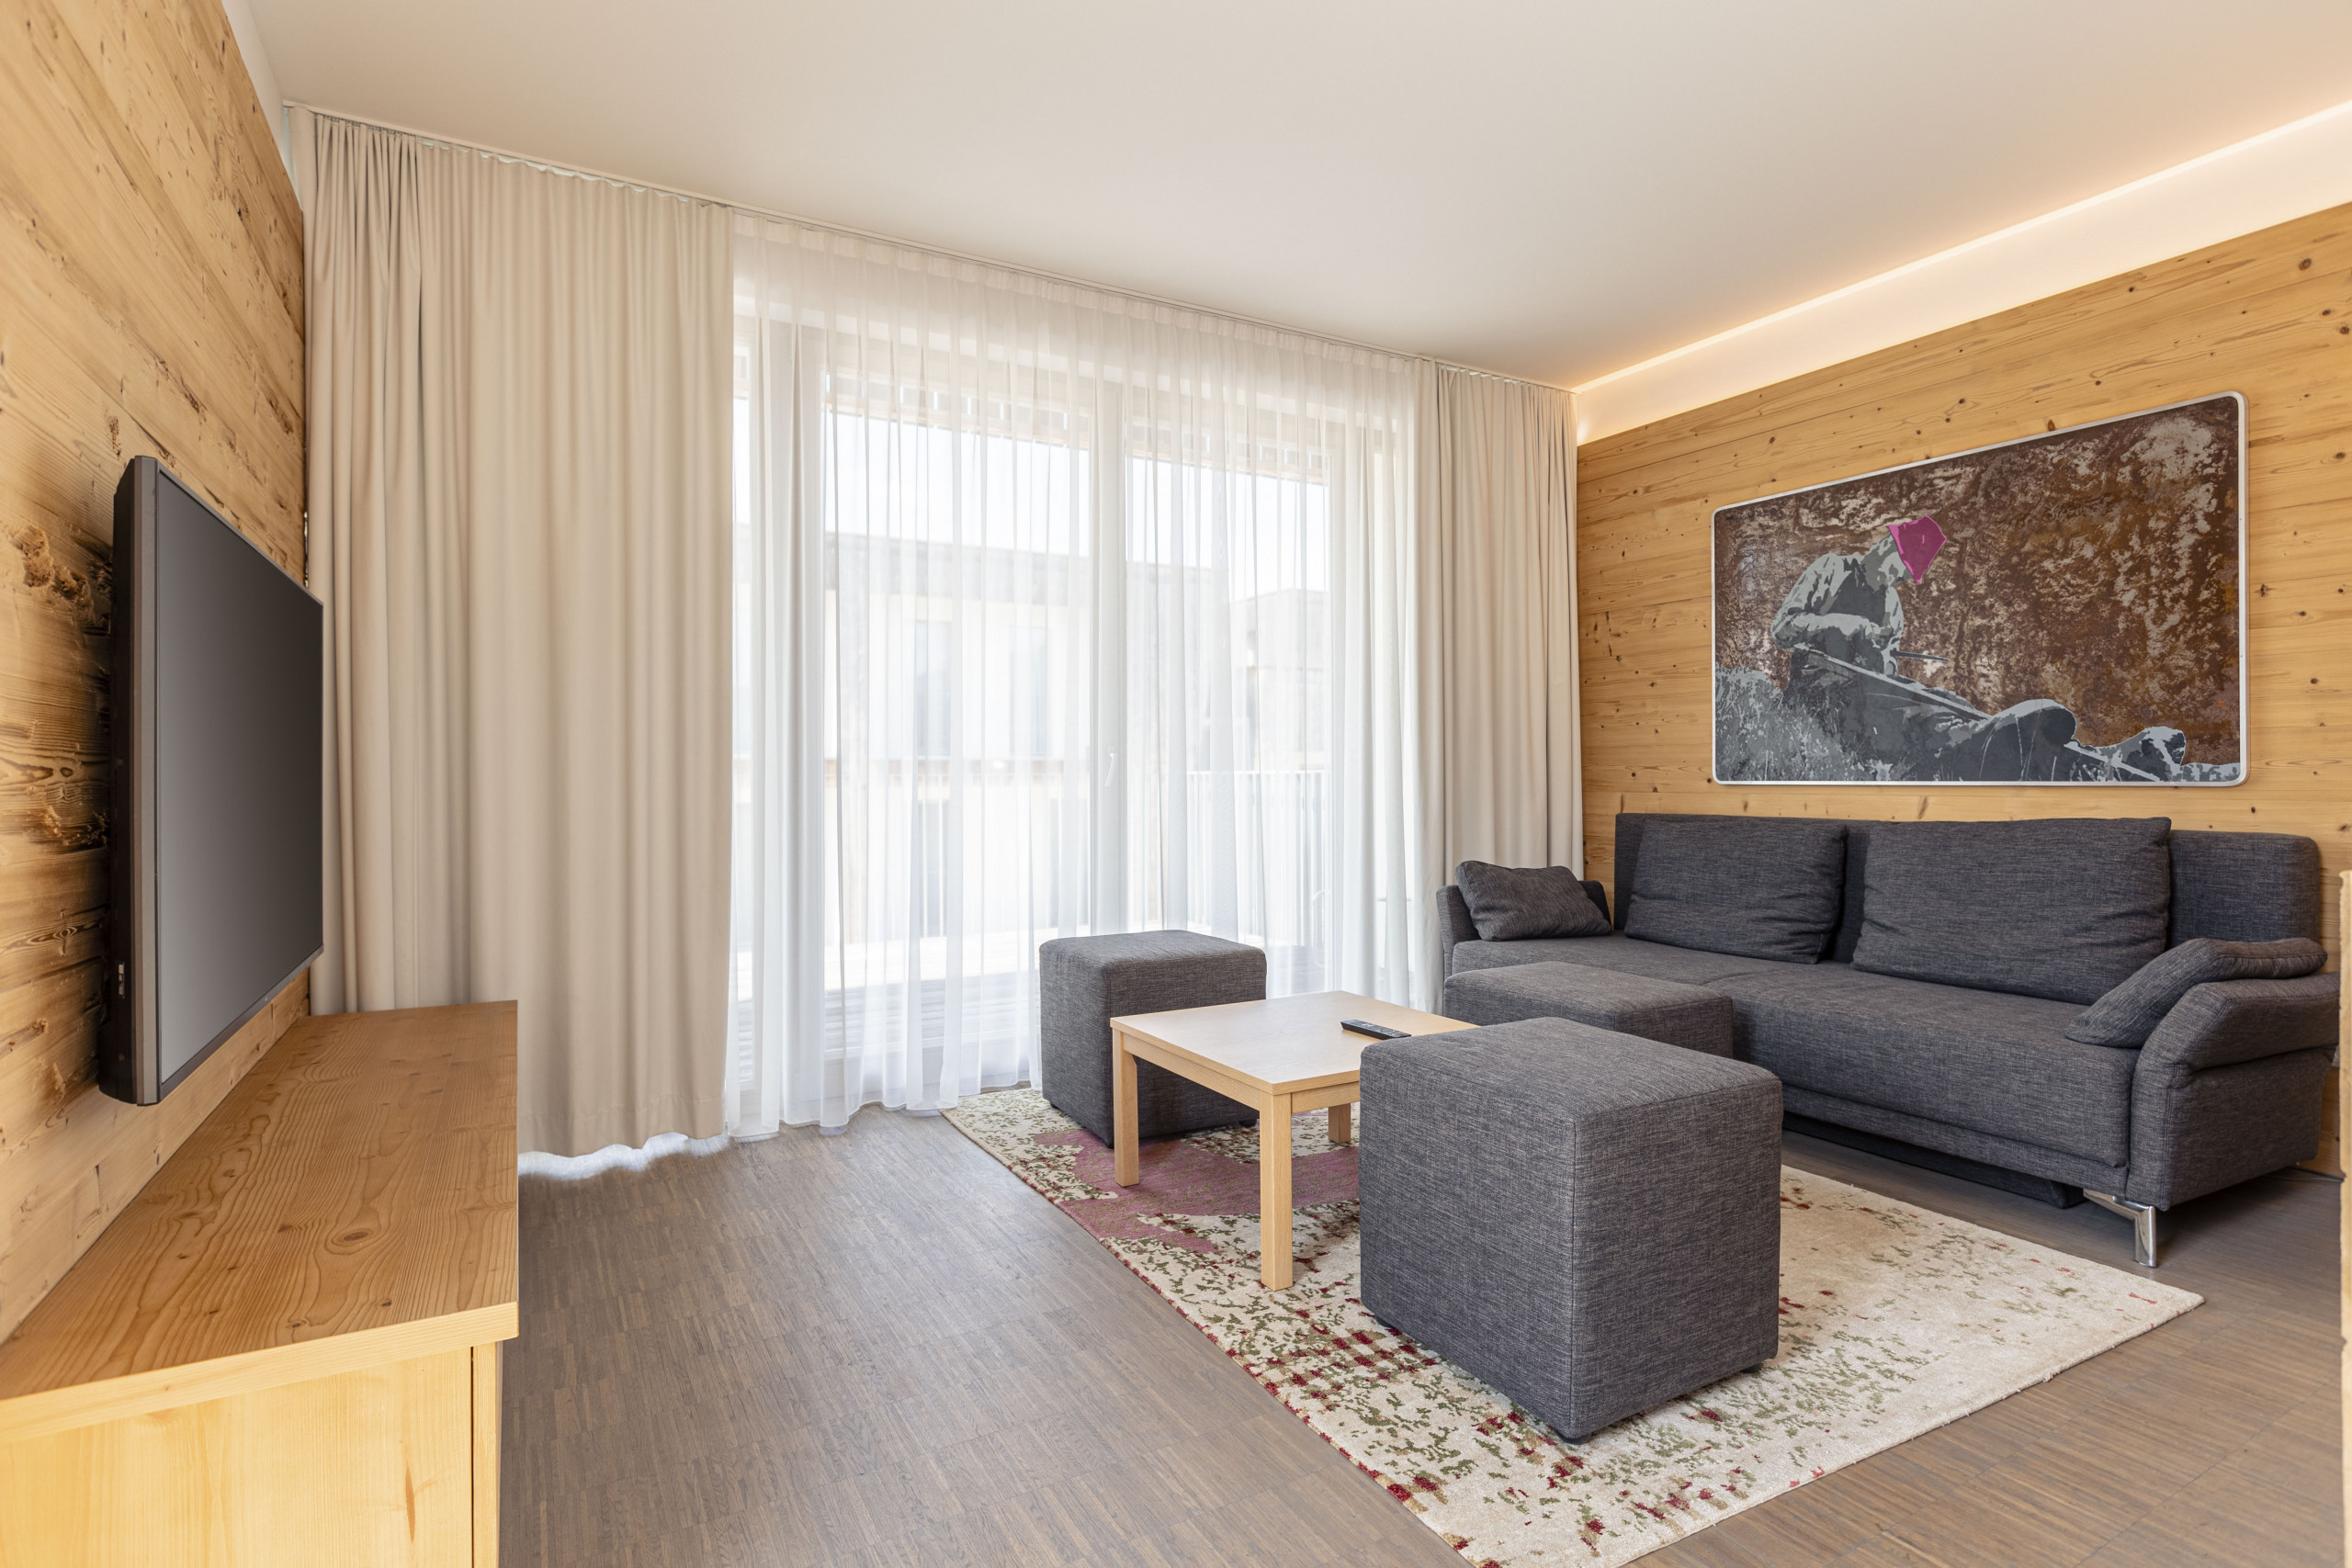  in Rohrmoos-Untertal - Superior Apartment with 2 bedrooms and sauna area